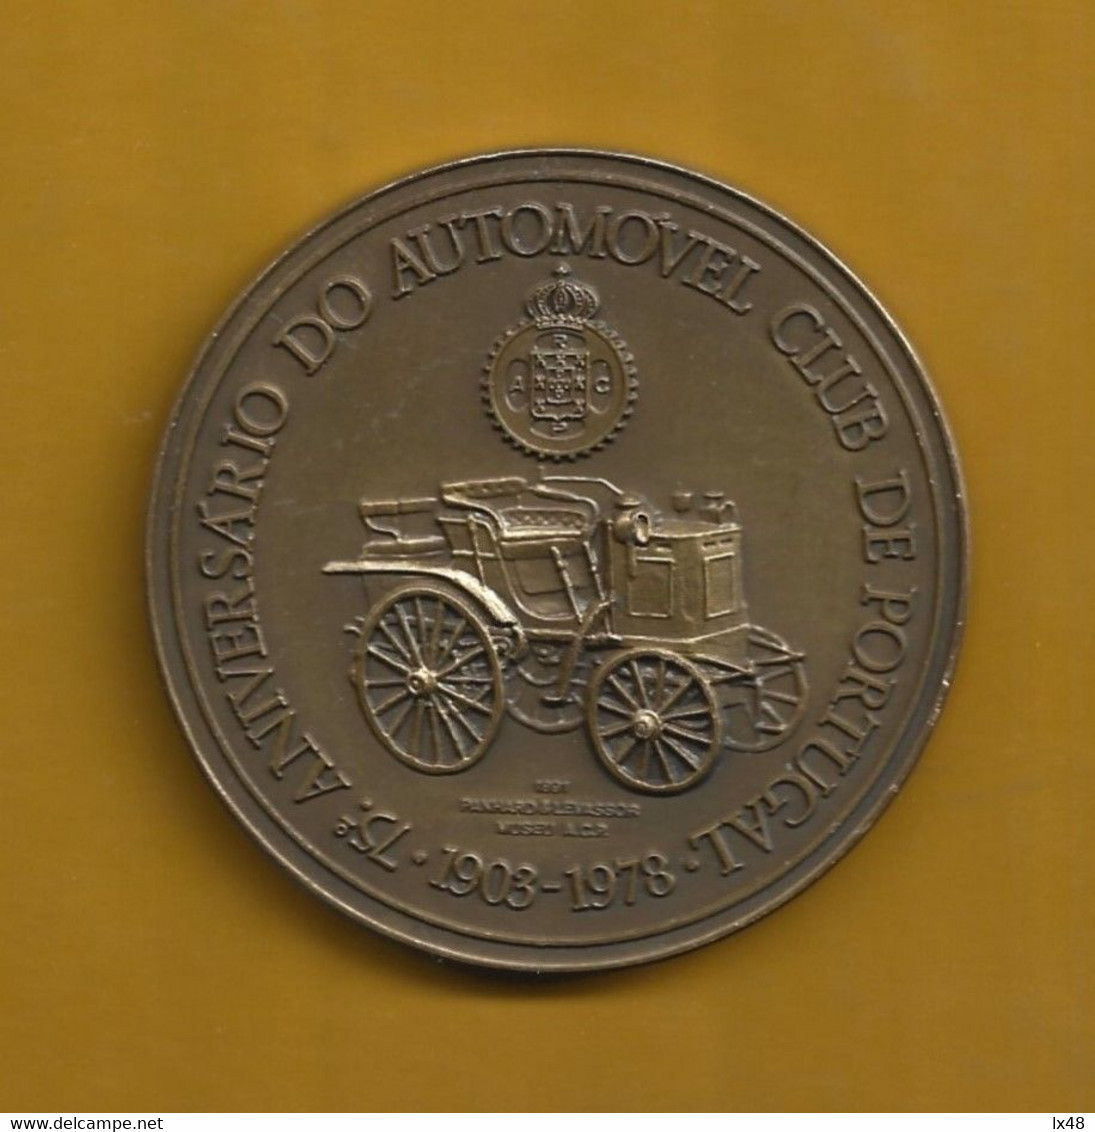 Car 'Panhard & Levassor' 1891 Museum Of ACP Lisbon. Bronze Medal For 75th Years Of ACP Automóvel Clube De Portugal. - Automobile